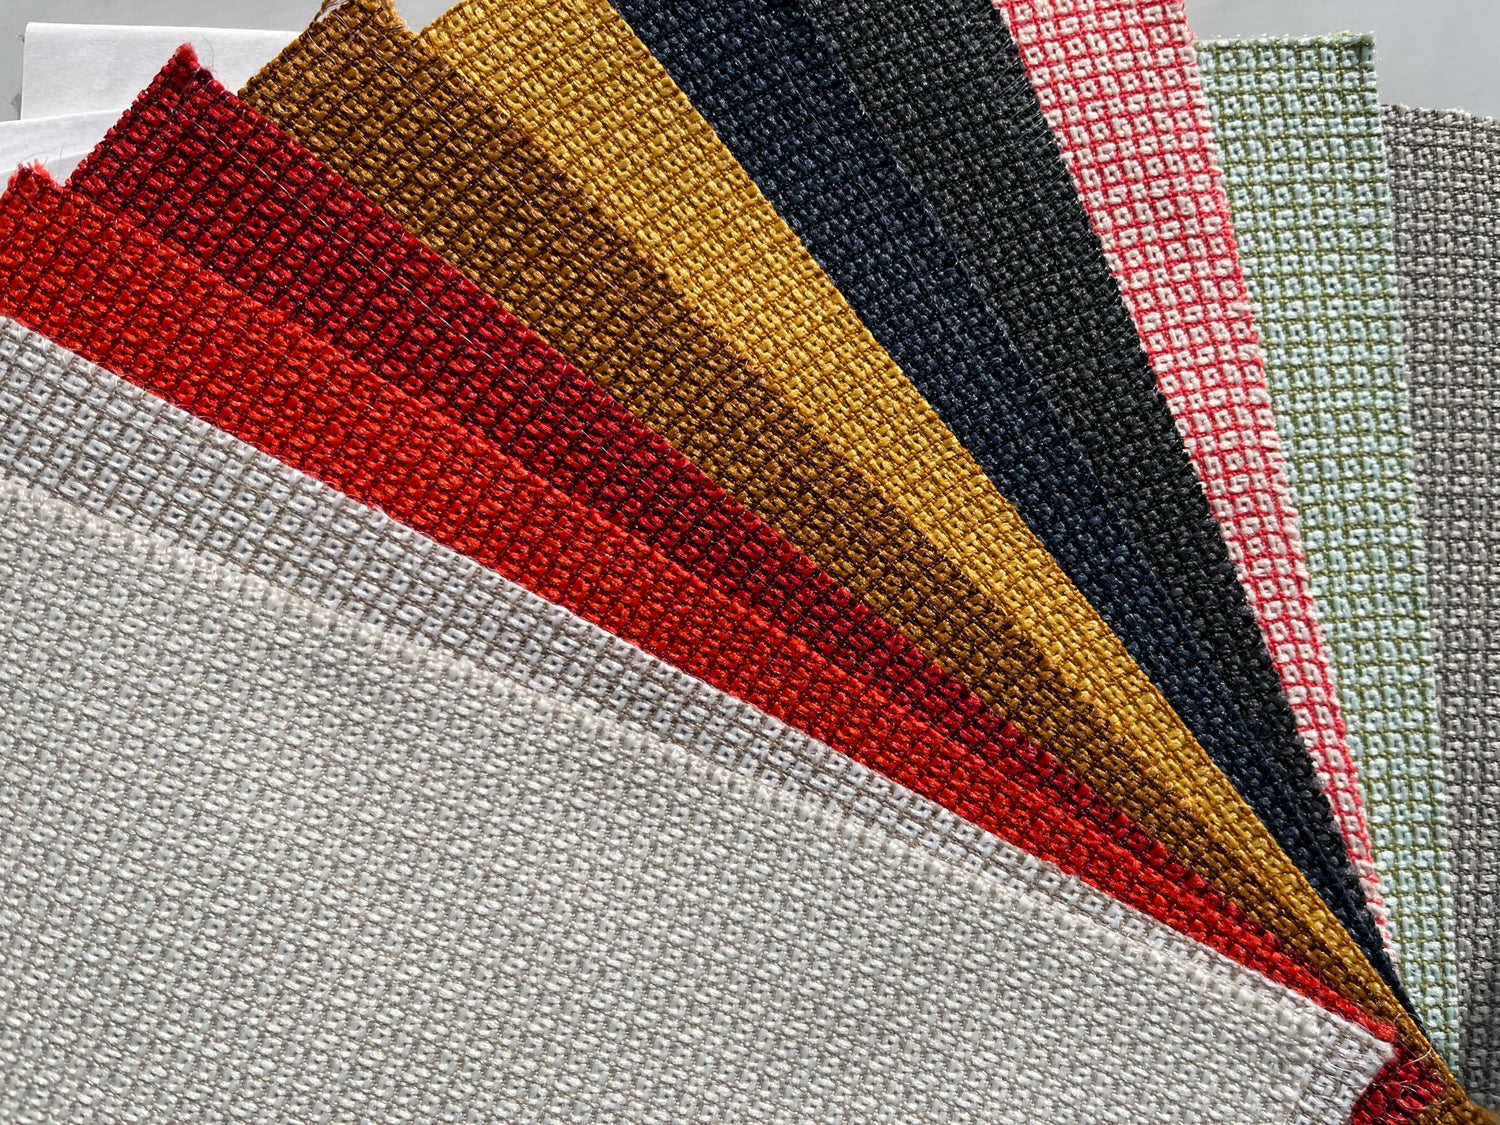 Phillips Design Oh Fabric - Maharam Metric collage